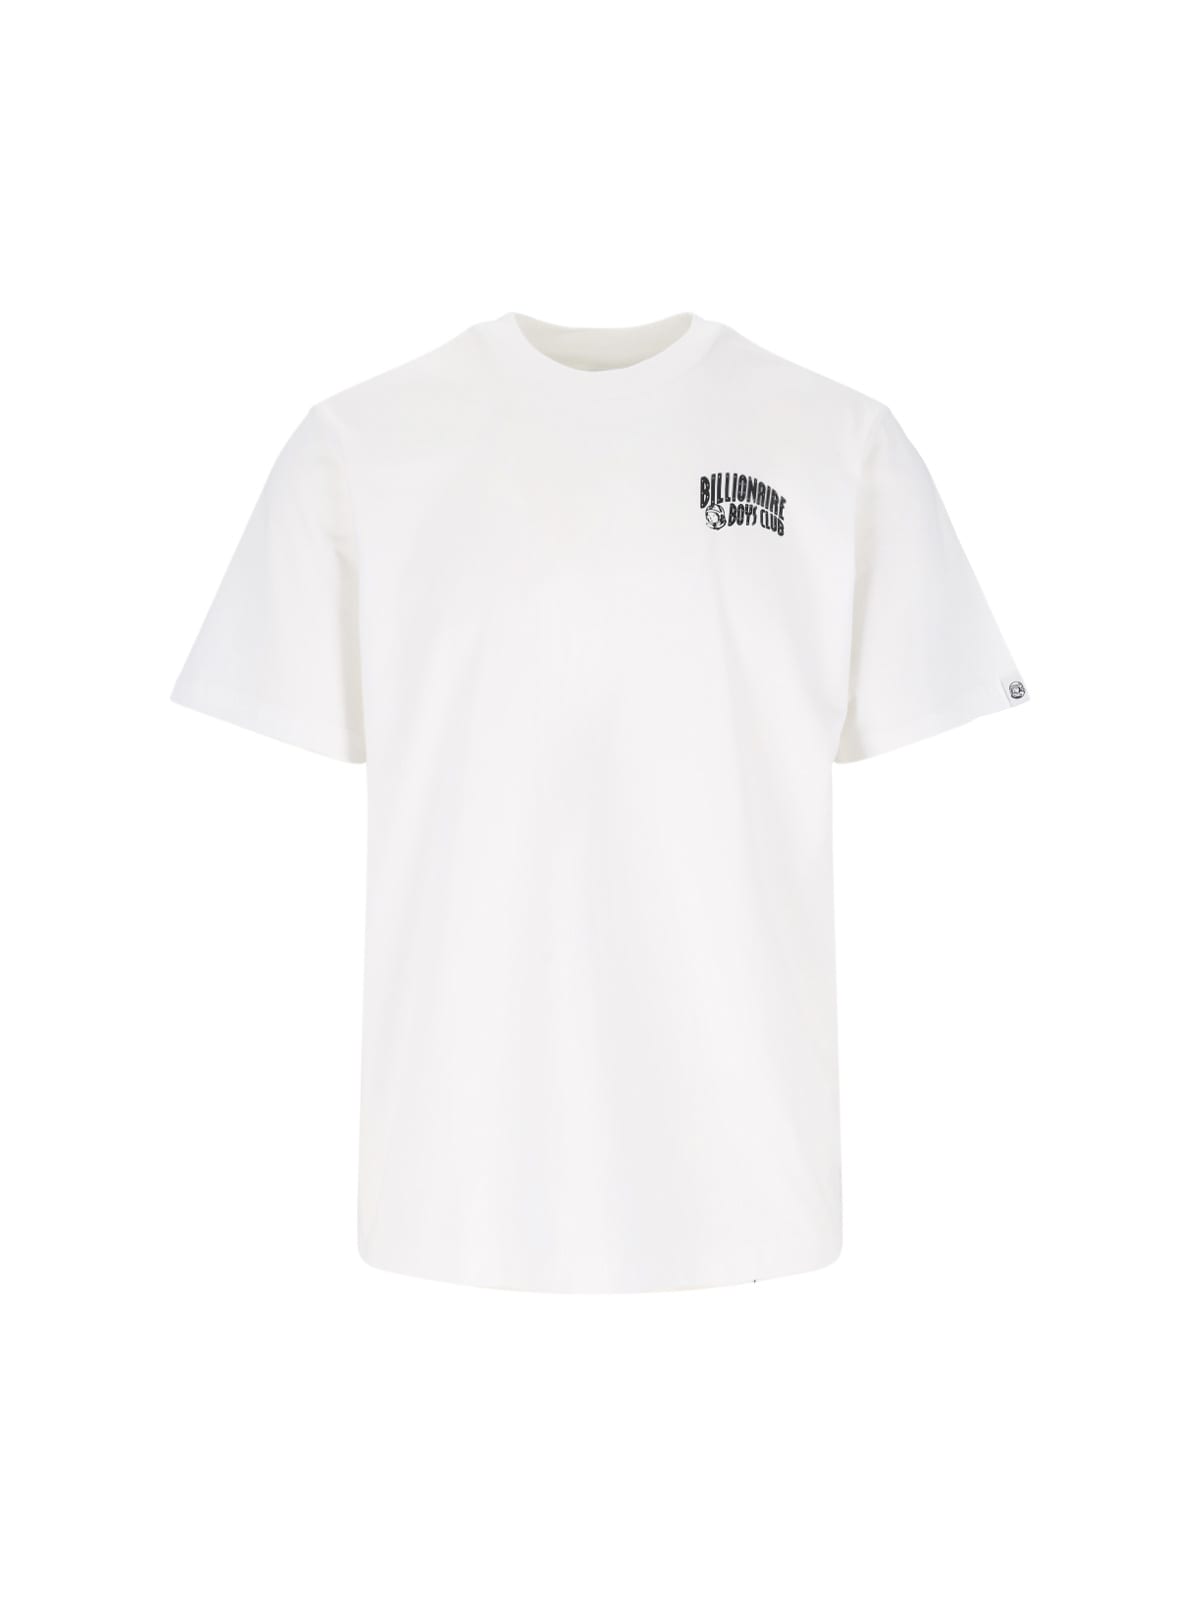 Billionaire Boys Club T-shirt In White